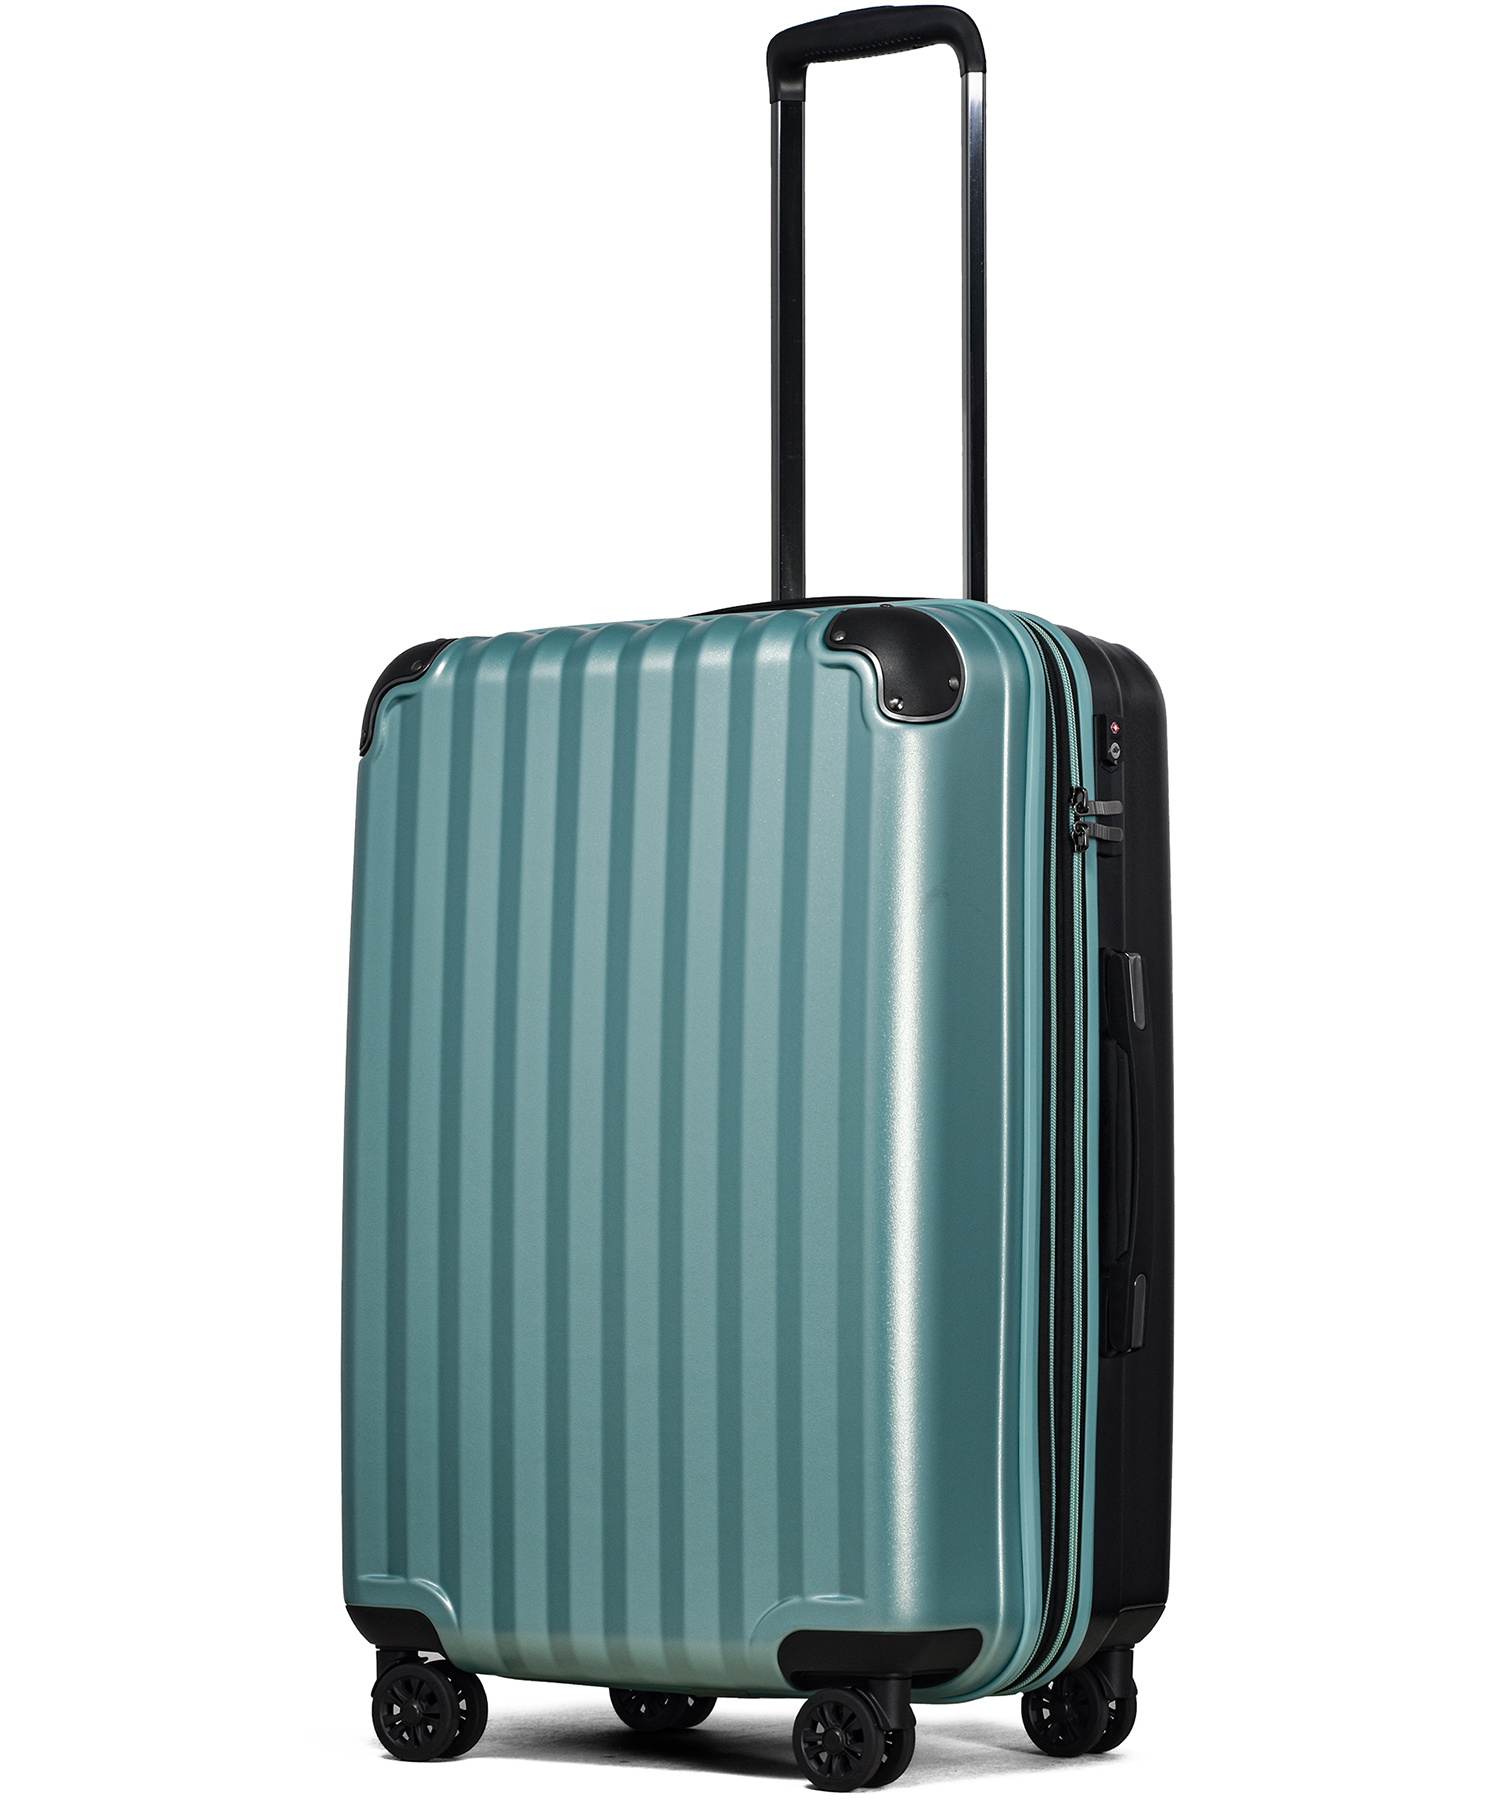 JP－Design】スーツケース LMサイズ 静音8輪キャスター 軽量 大容量